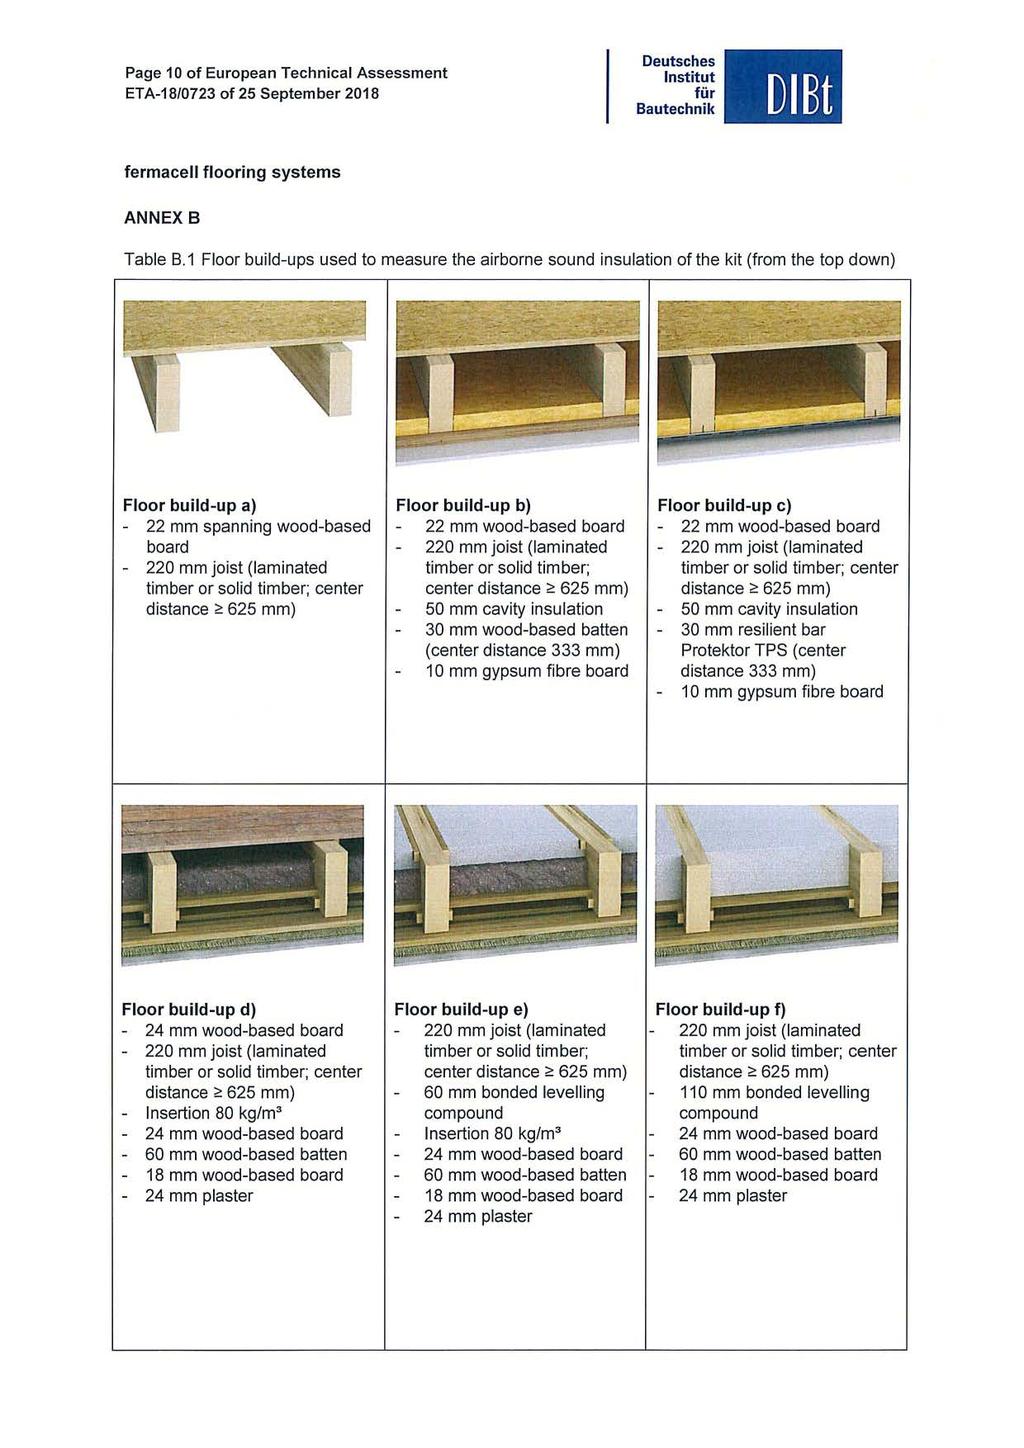 Page 10 of European Technical Assessment ETA-18/0723 of 25 September 2018 Deutsches flir OIBt fermacell flooring systems ANNEX B Table 8.